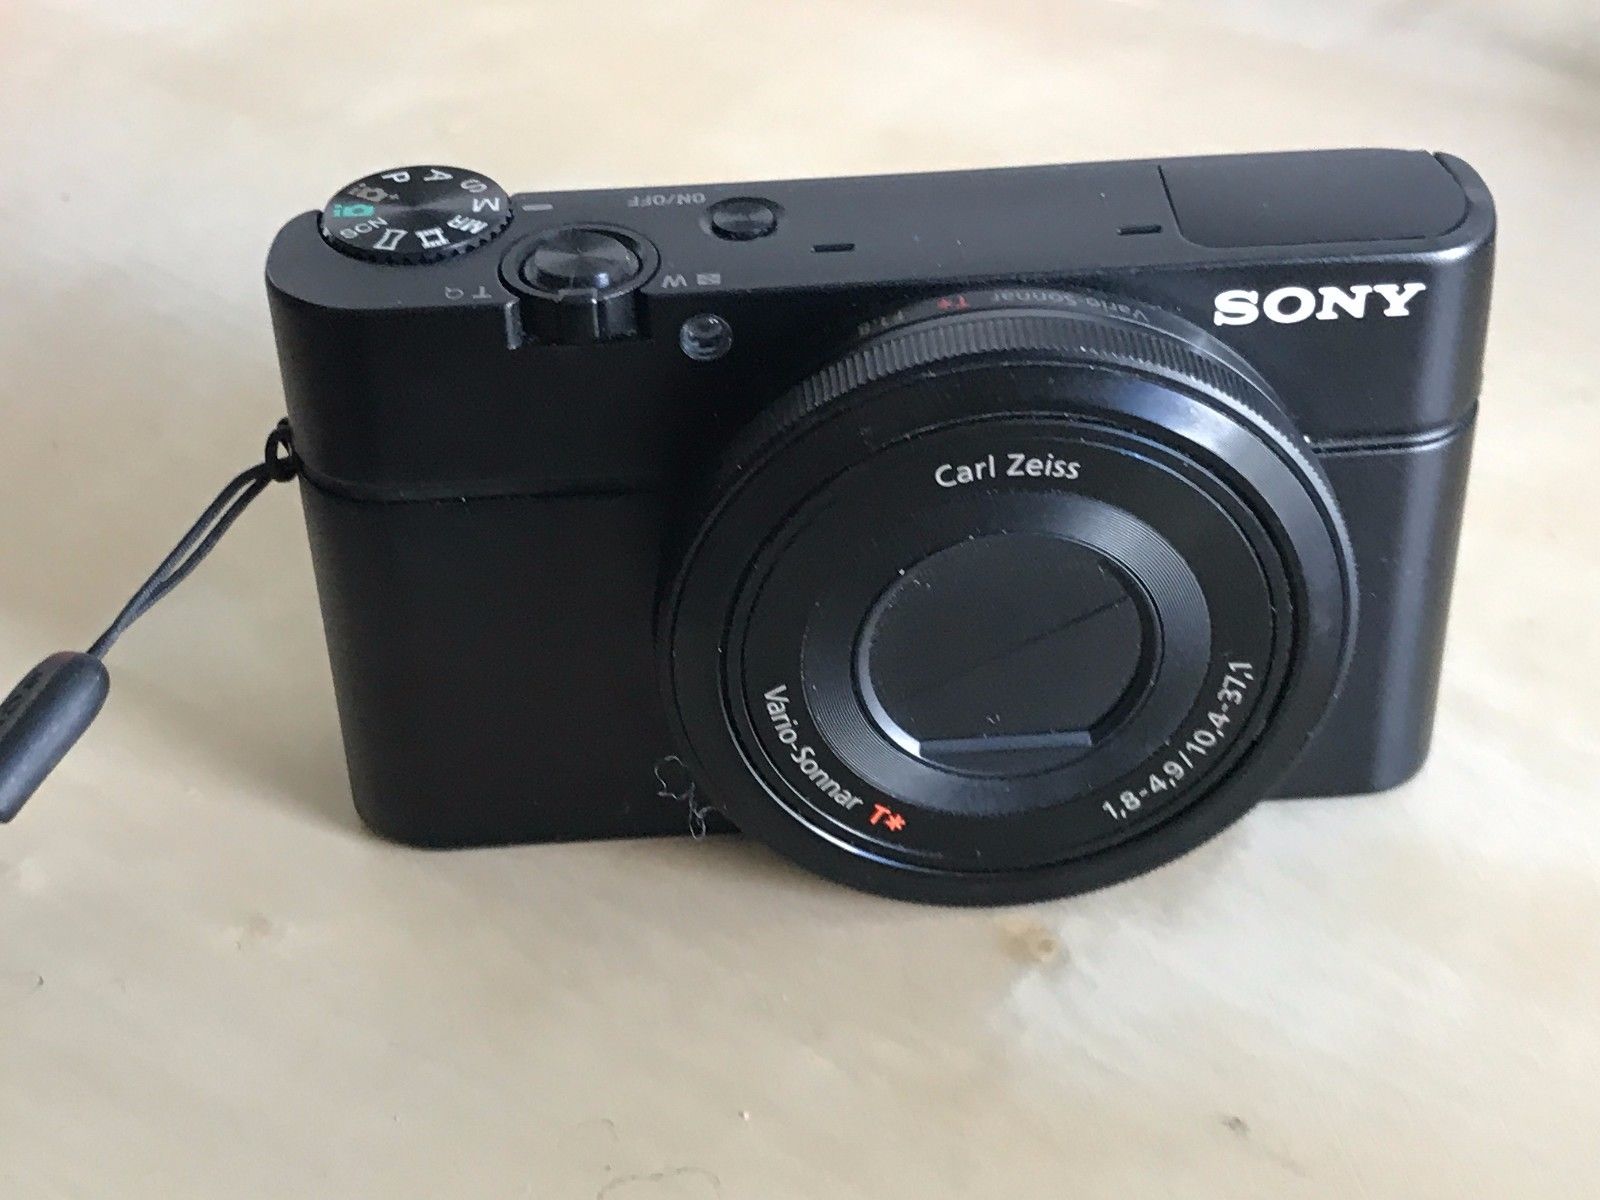 Sony Cyber-shot DSC-RX100 20.2 MP Digitalkamera - Schwarz